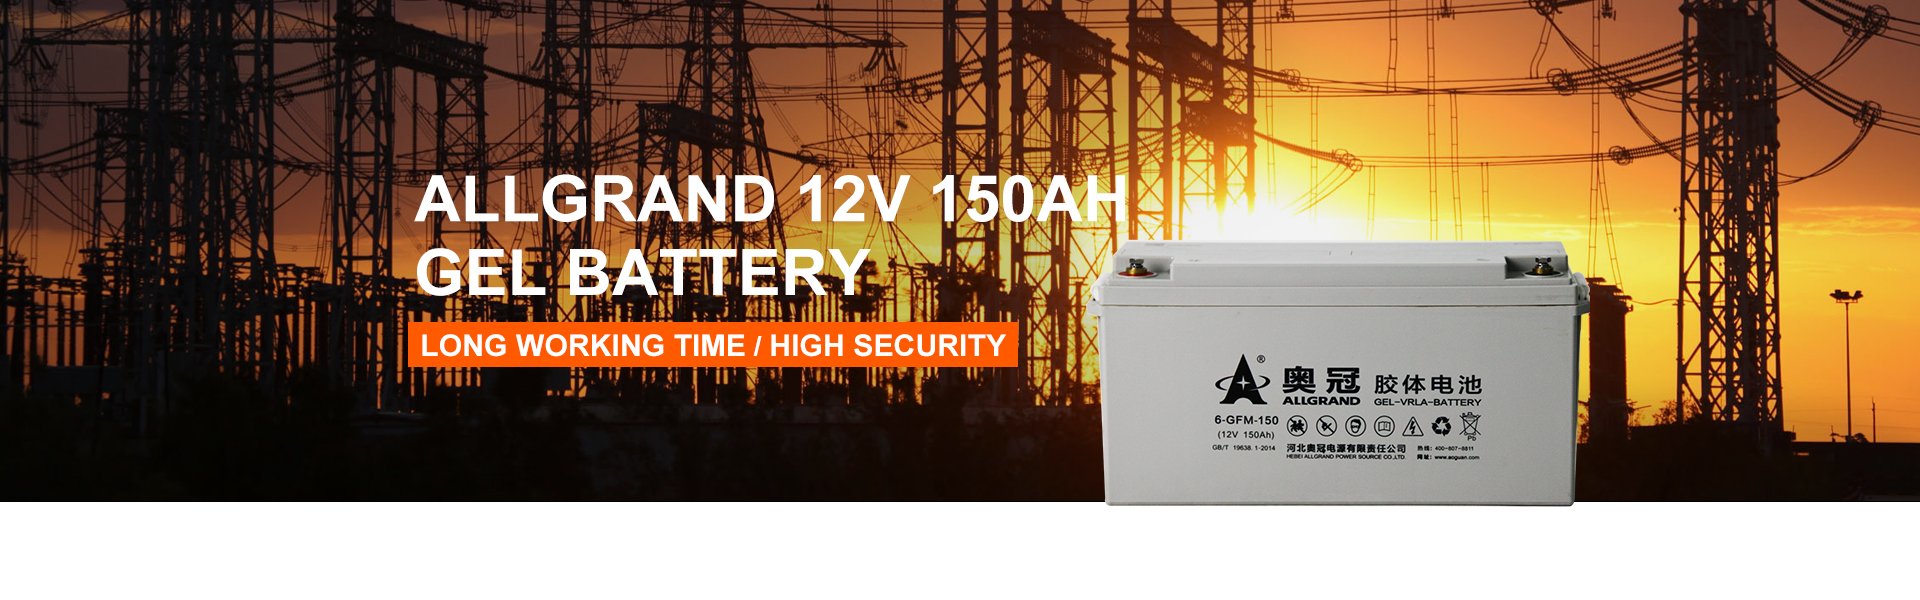 Allgrand gel battery 12v 150ah price